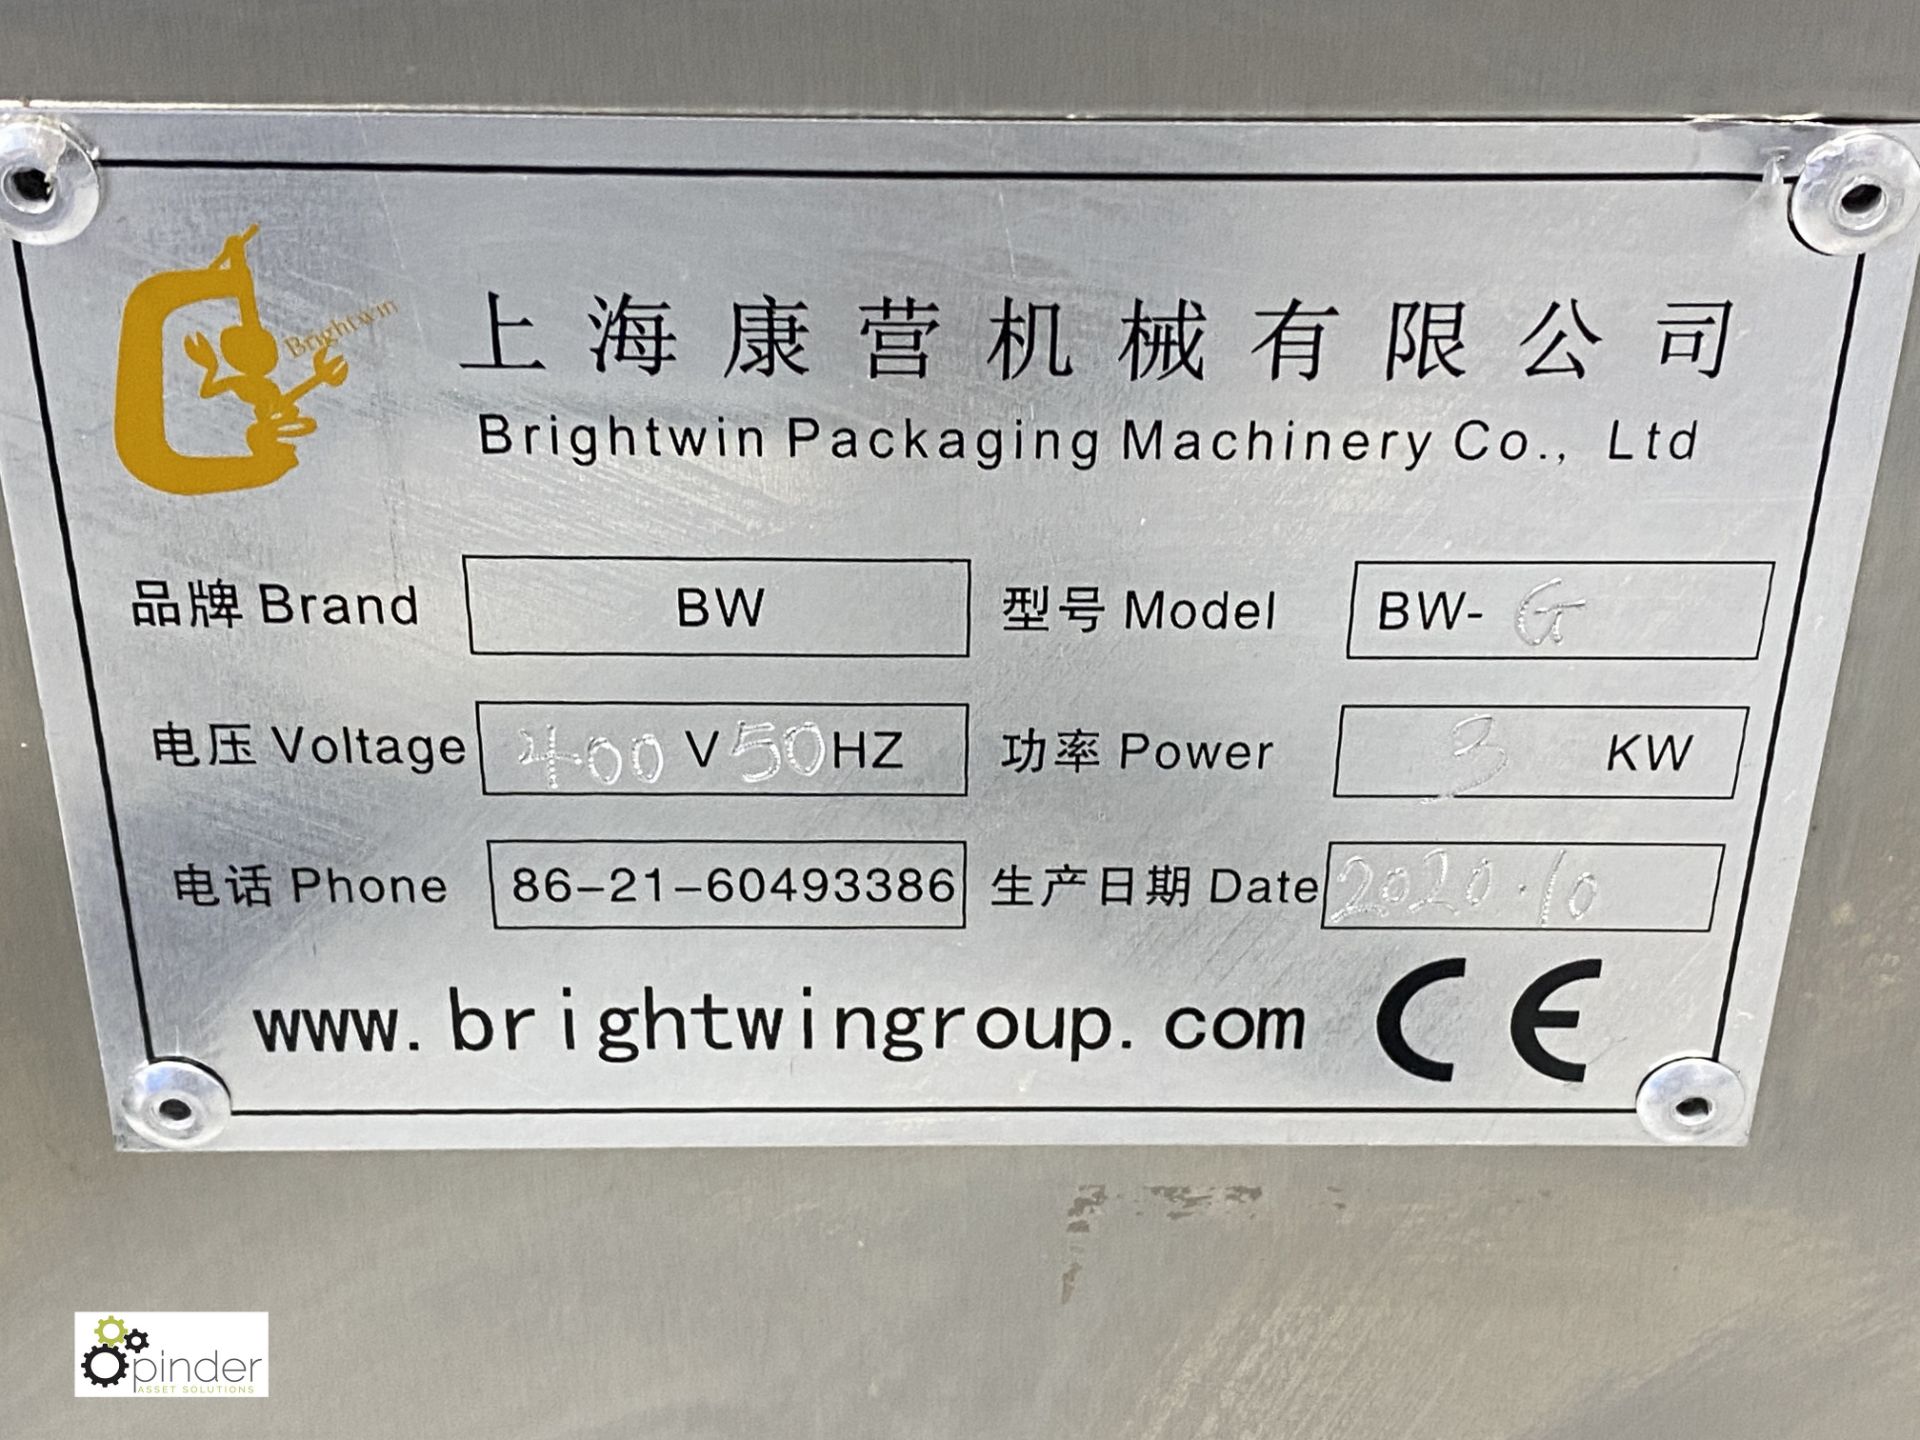 Brightwin Packaging Machinery Co Ltd BW-G 24-station Test/Vape Tube Filling Machine, capacity 3200 - Image 4 of 20